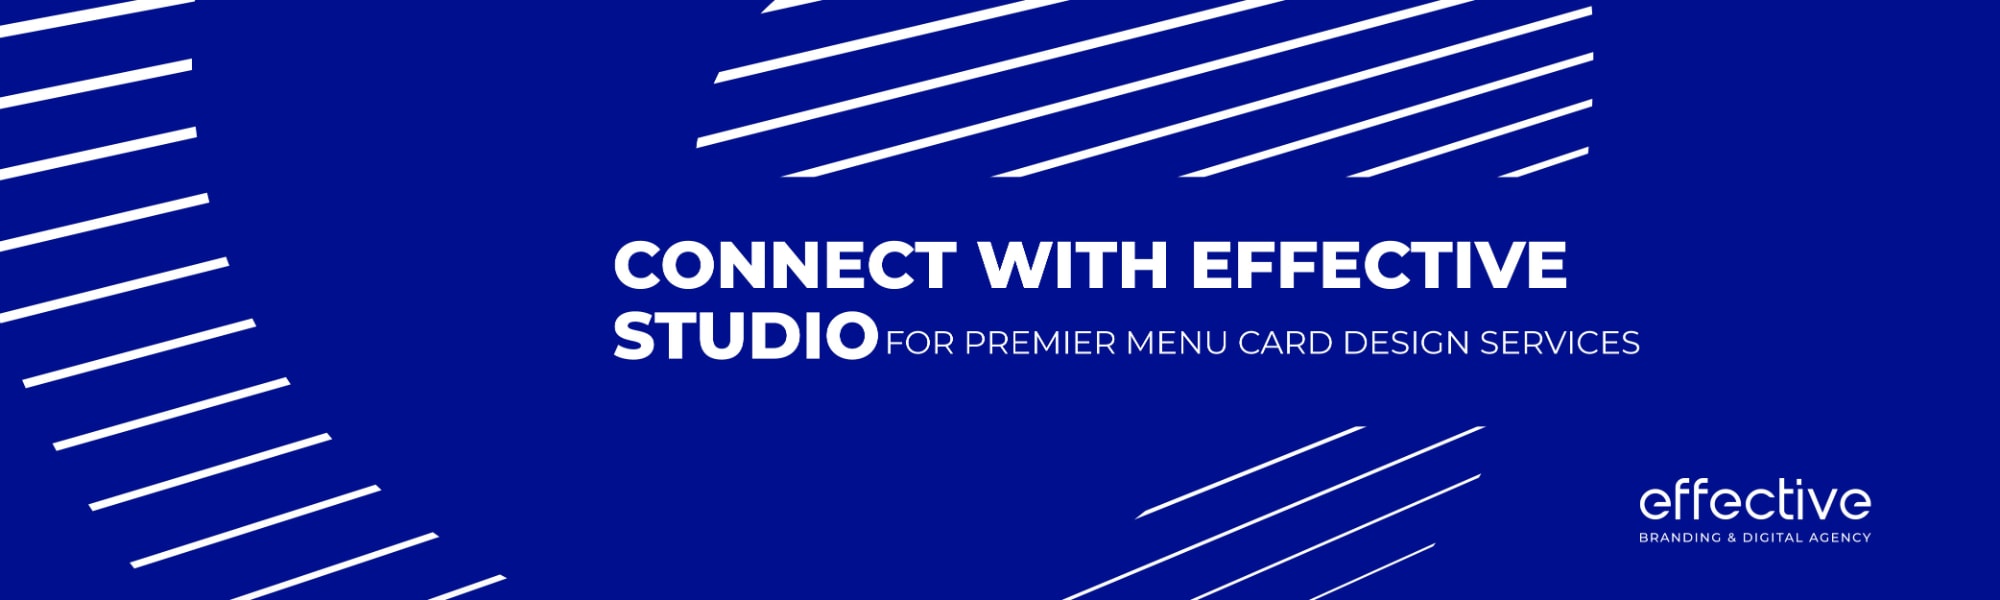 Connect with Effective Studio for Premier Menu Card Design Services